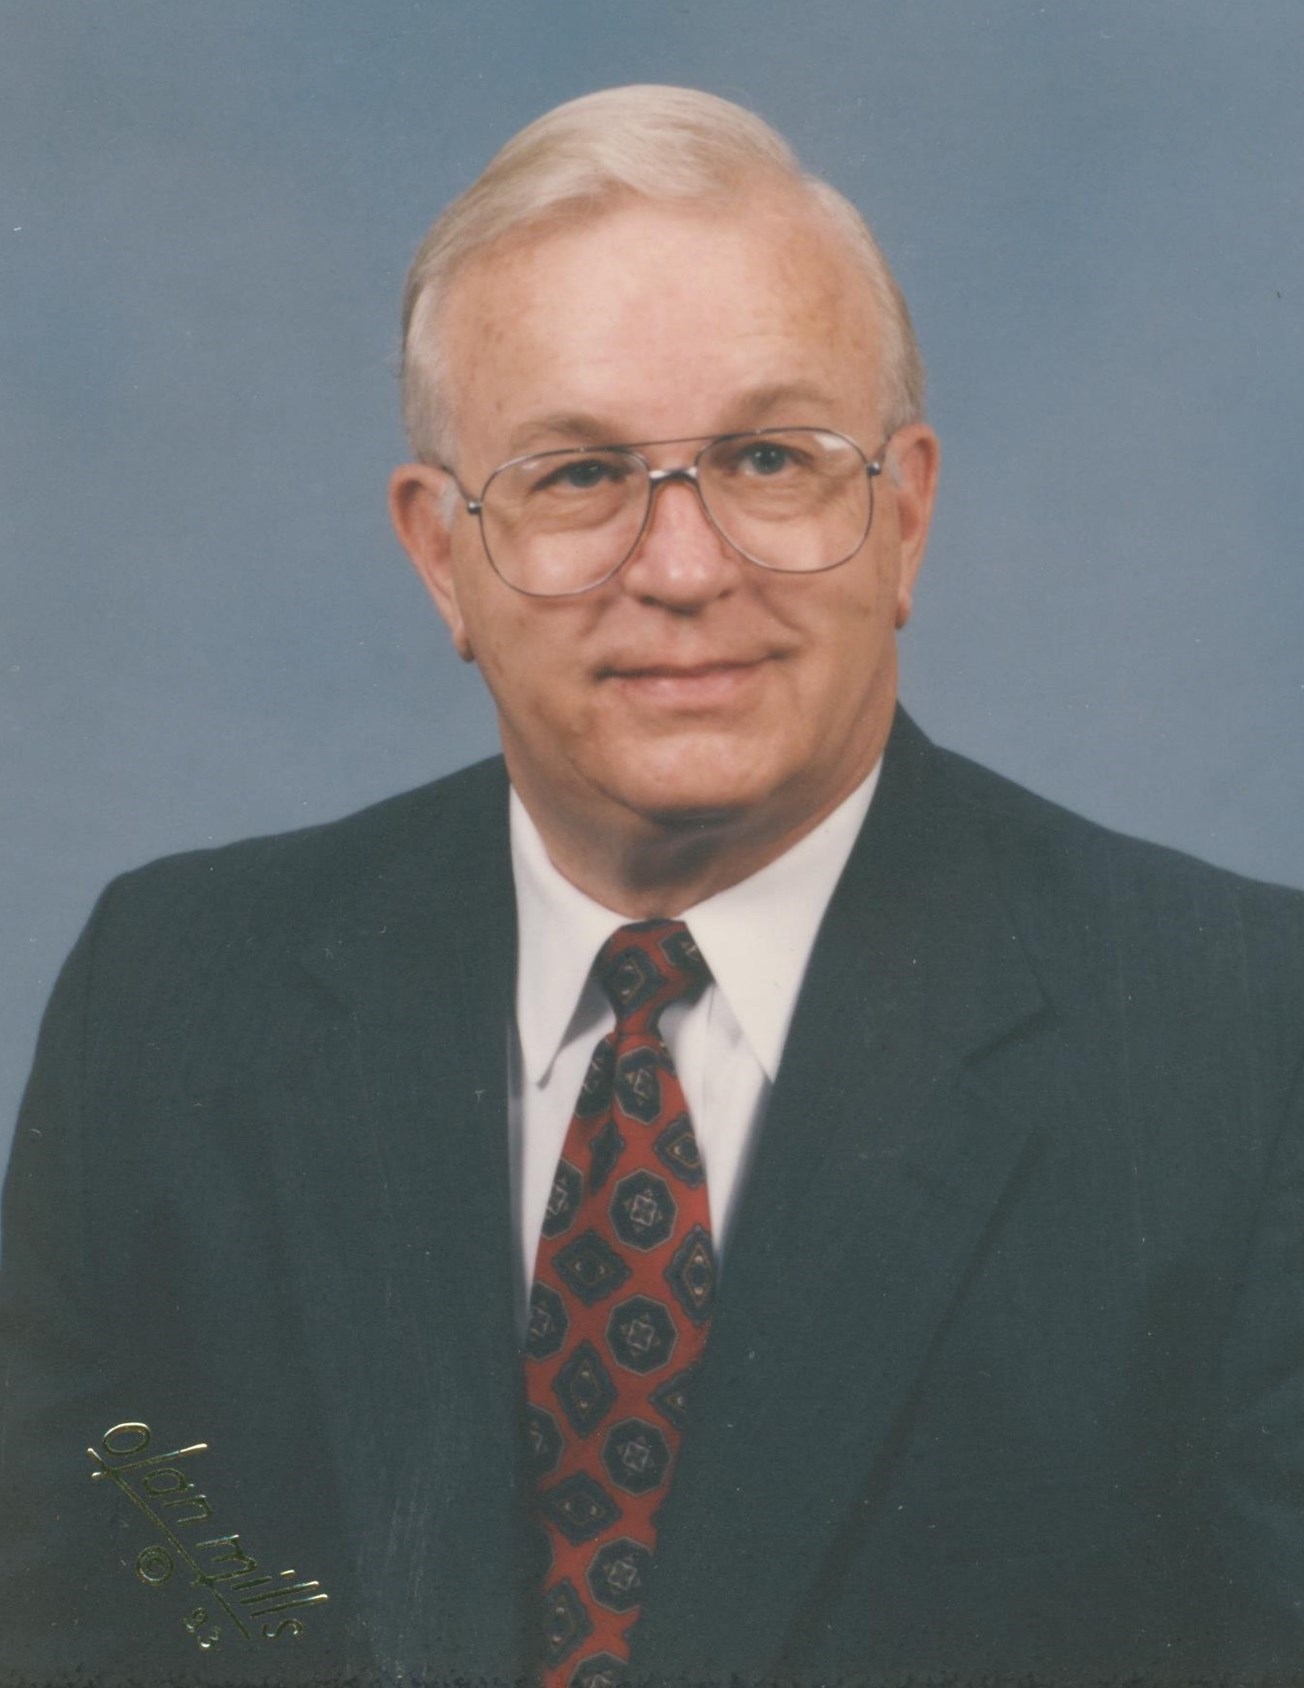 Robert G. Friar Obituary - Cary, NC